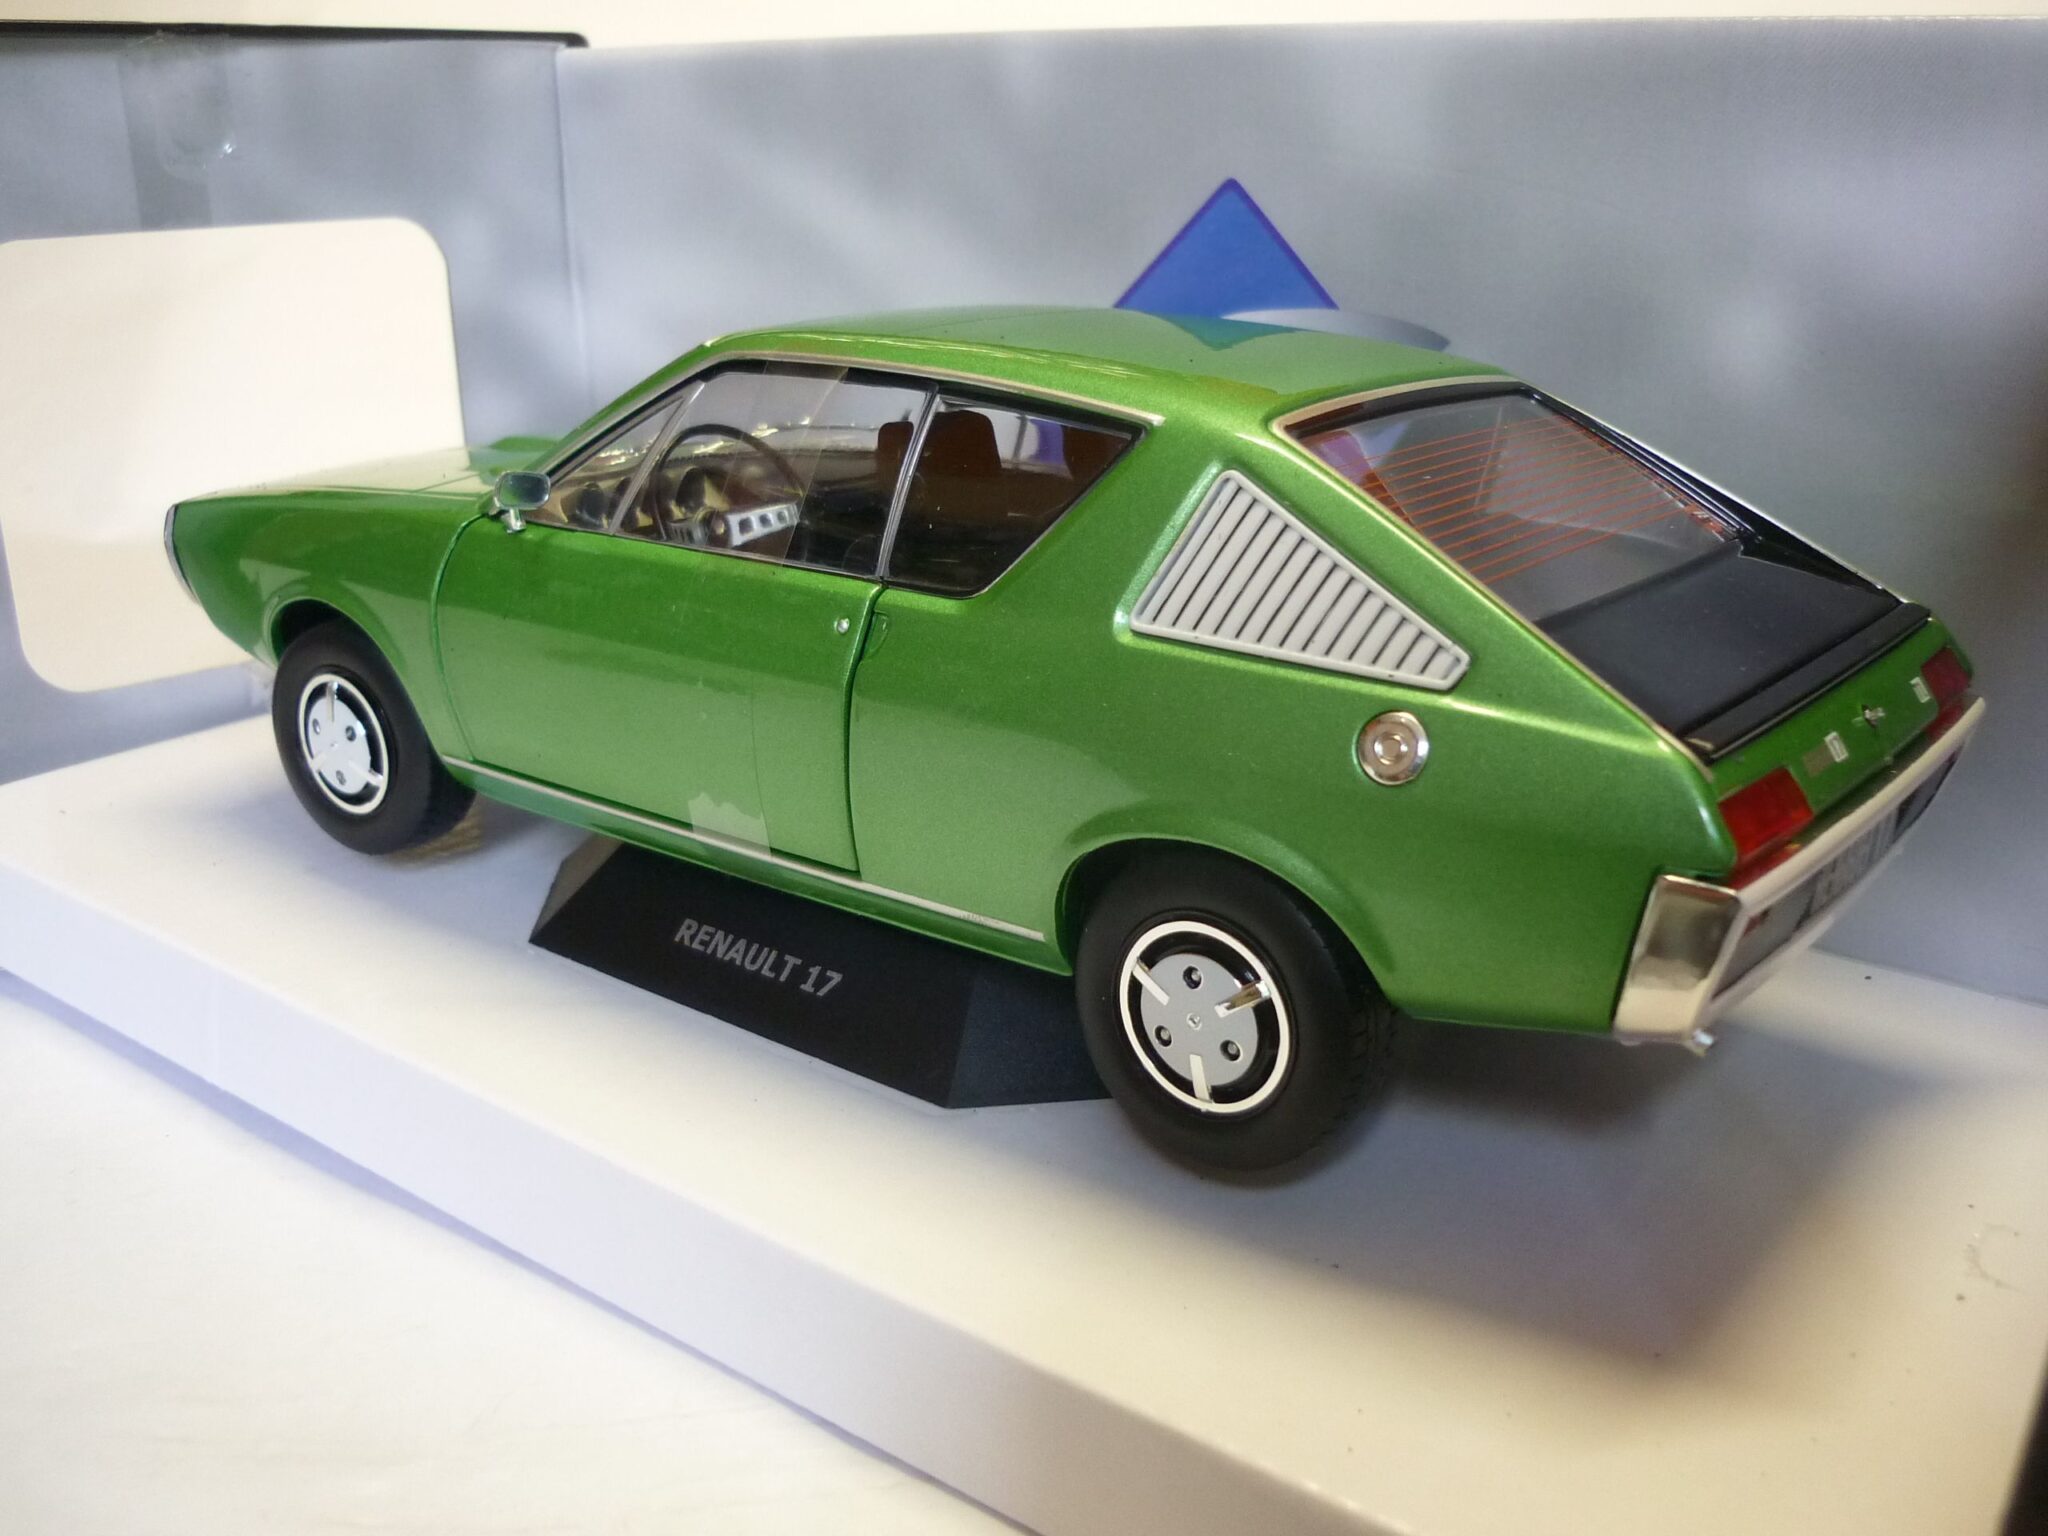  Renault  17  1976 1  18   Solido  Les Miniatures